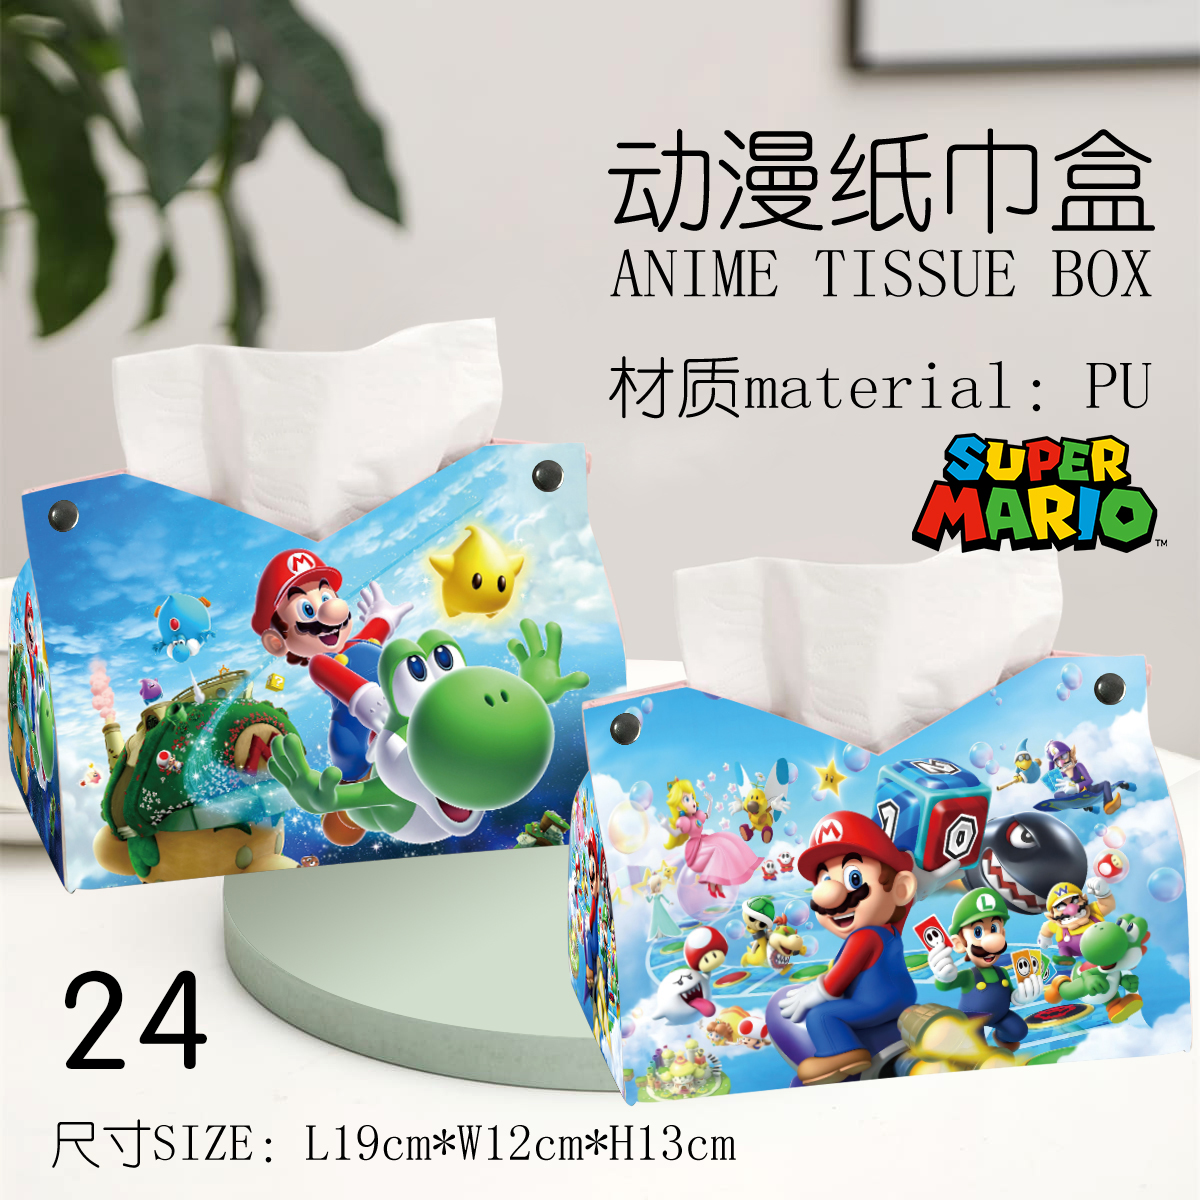 Super Mario anime Tissue box